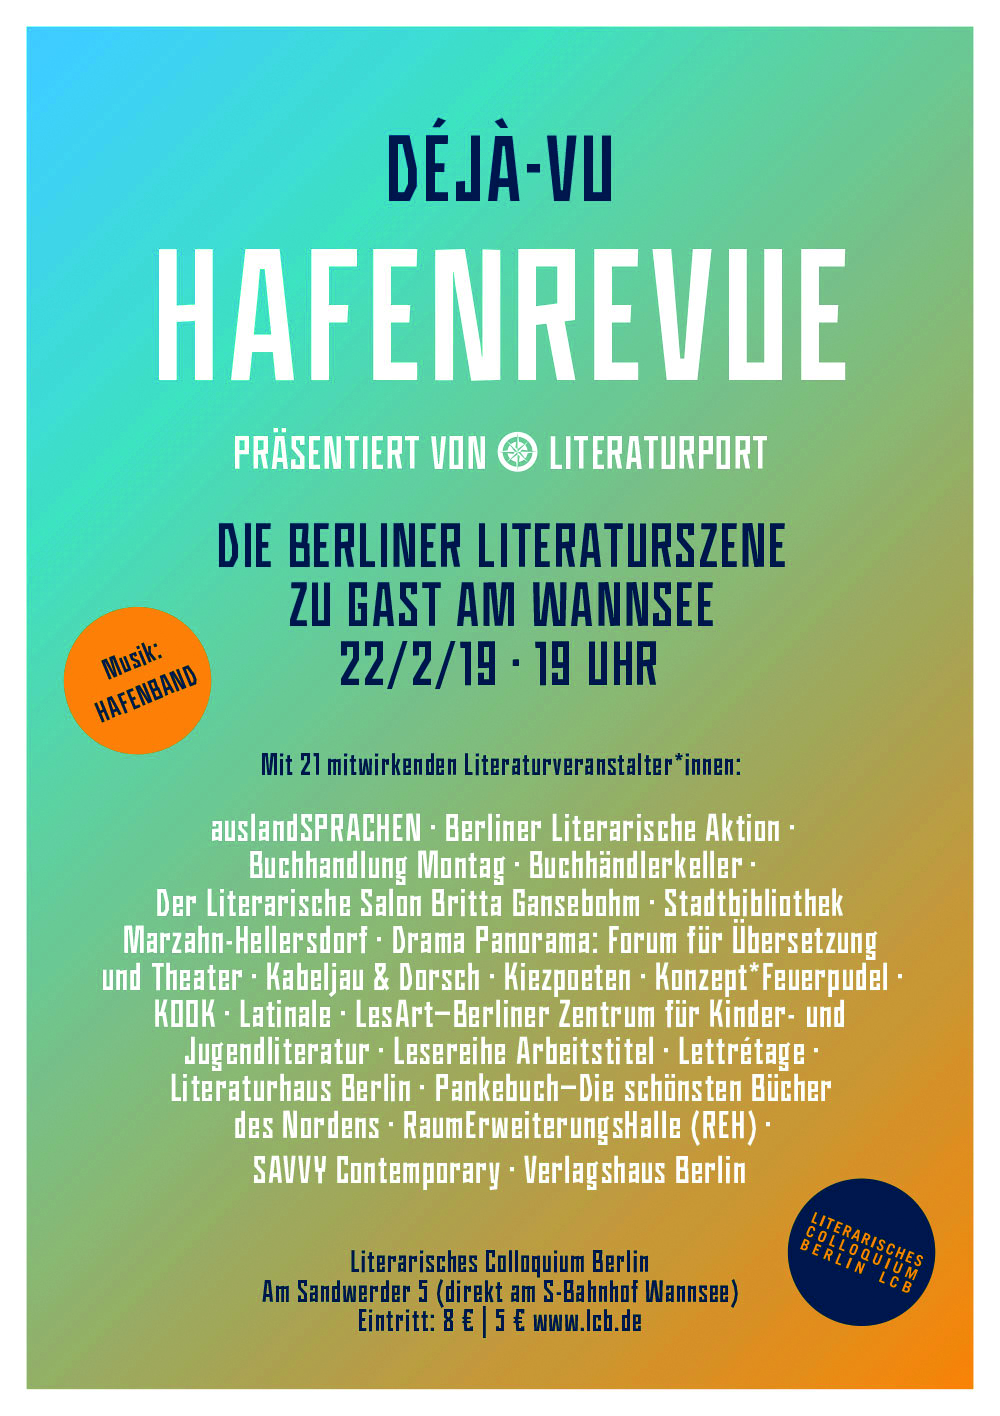 Hafenrevue DÉJÀ-VU 2019 Poster